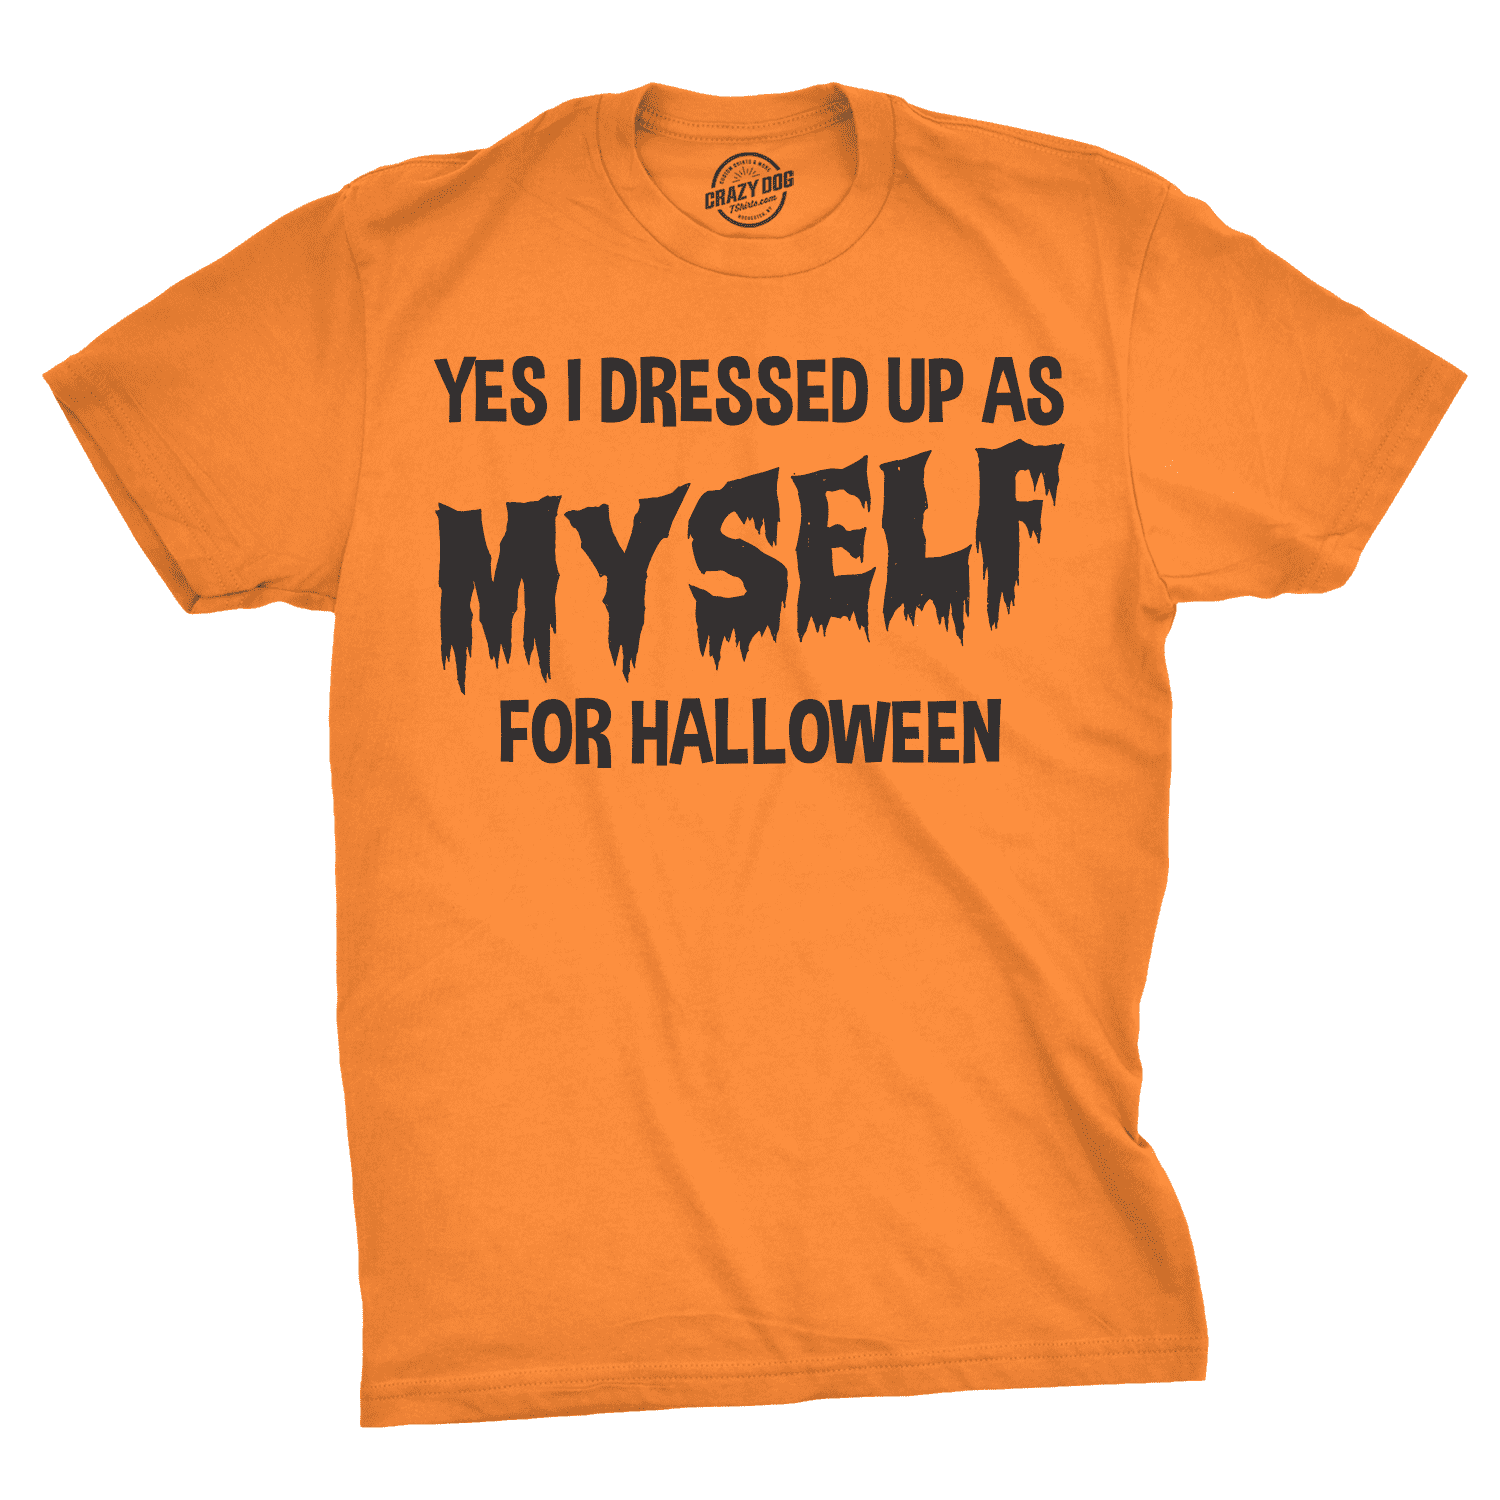 Funny Candy Costume Shirt-Halloween Costume Shirt,Teacher Halloween tshirts,Pretend I'm a Candy,Gift Ideas for Women Halloween,Funny Spooky